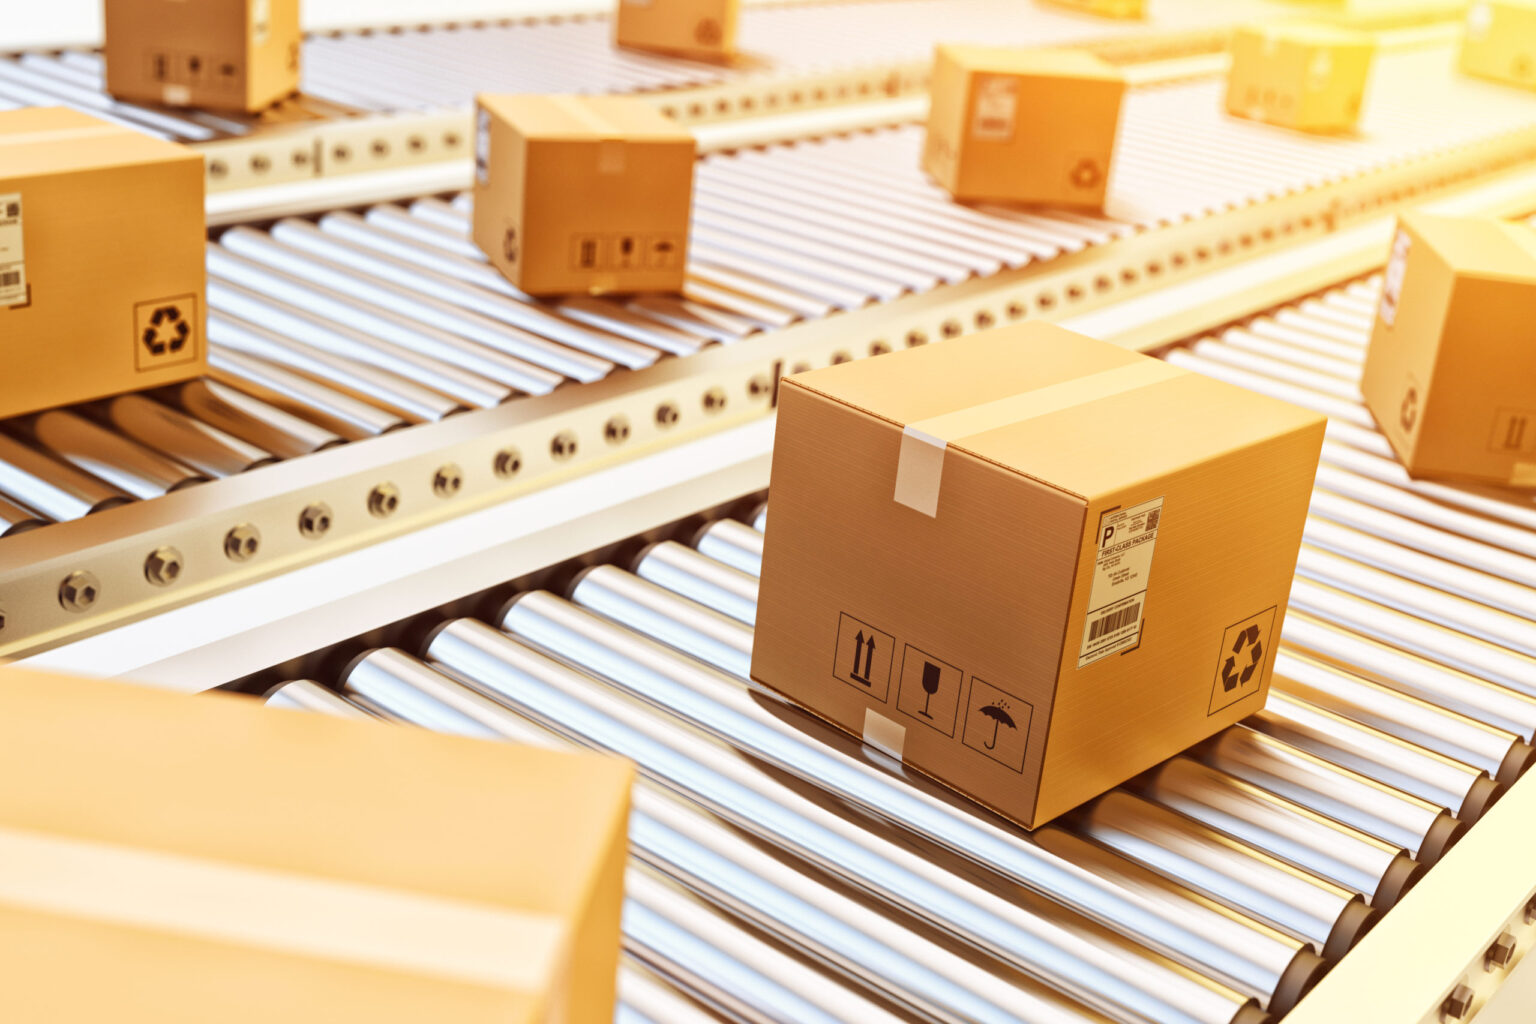 Cardboard boxes on conveyor belt in warehouse